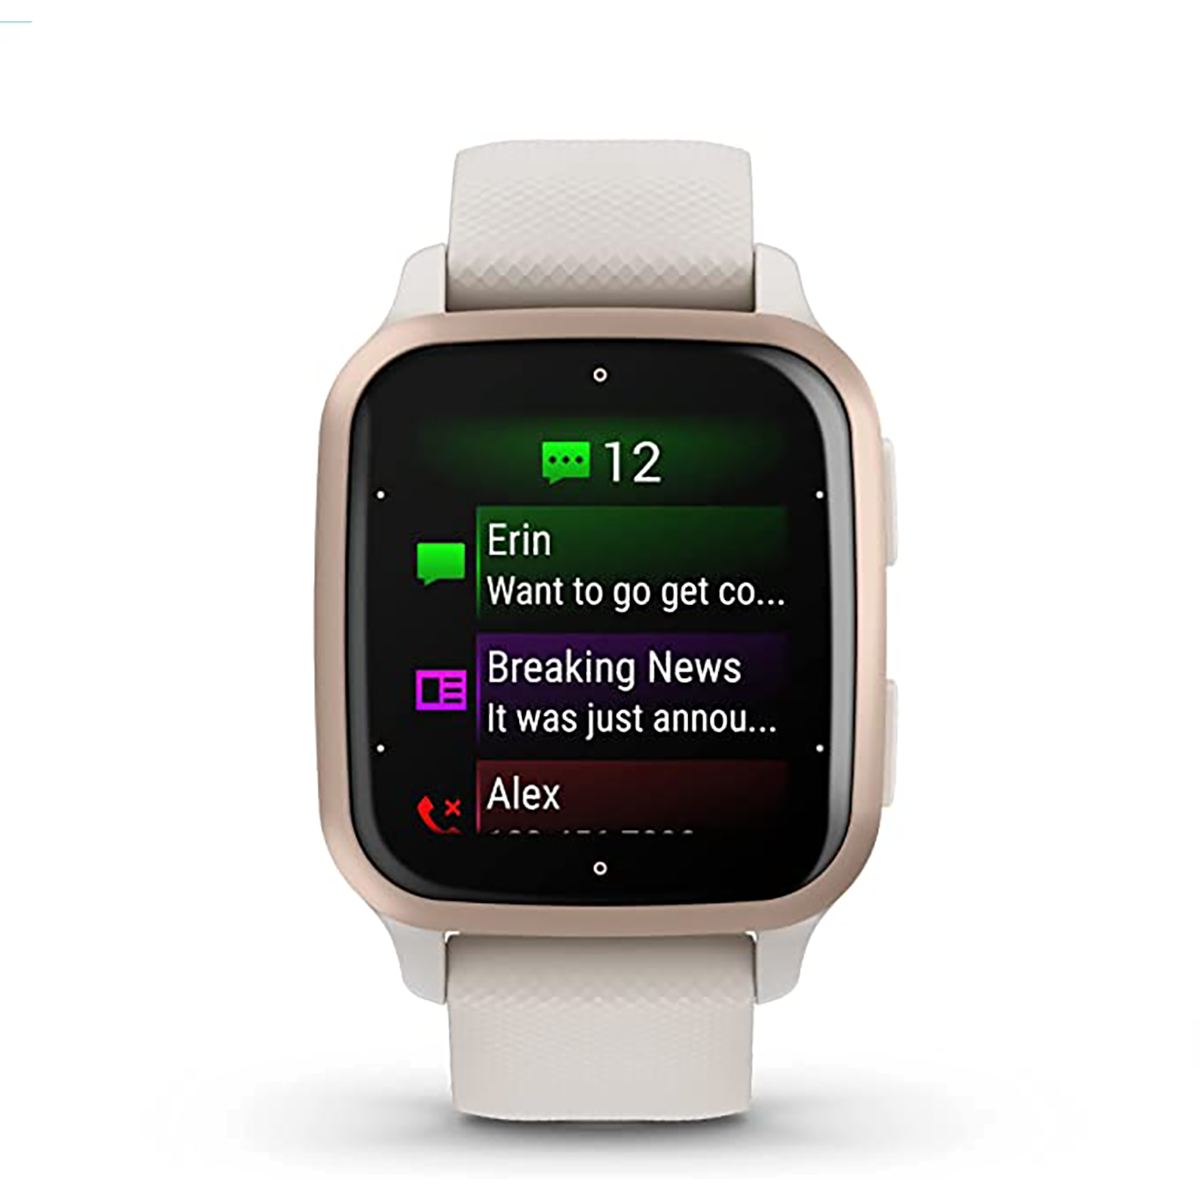 Garmin Venu Sq 2 Smart Watch 